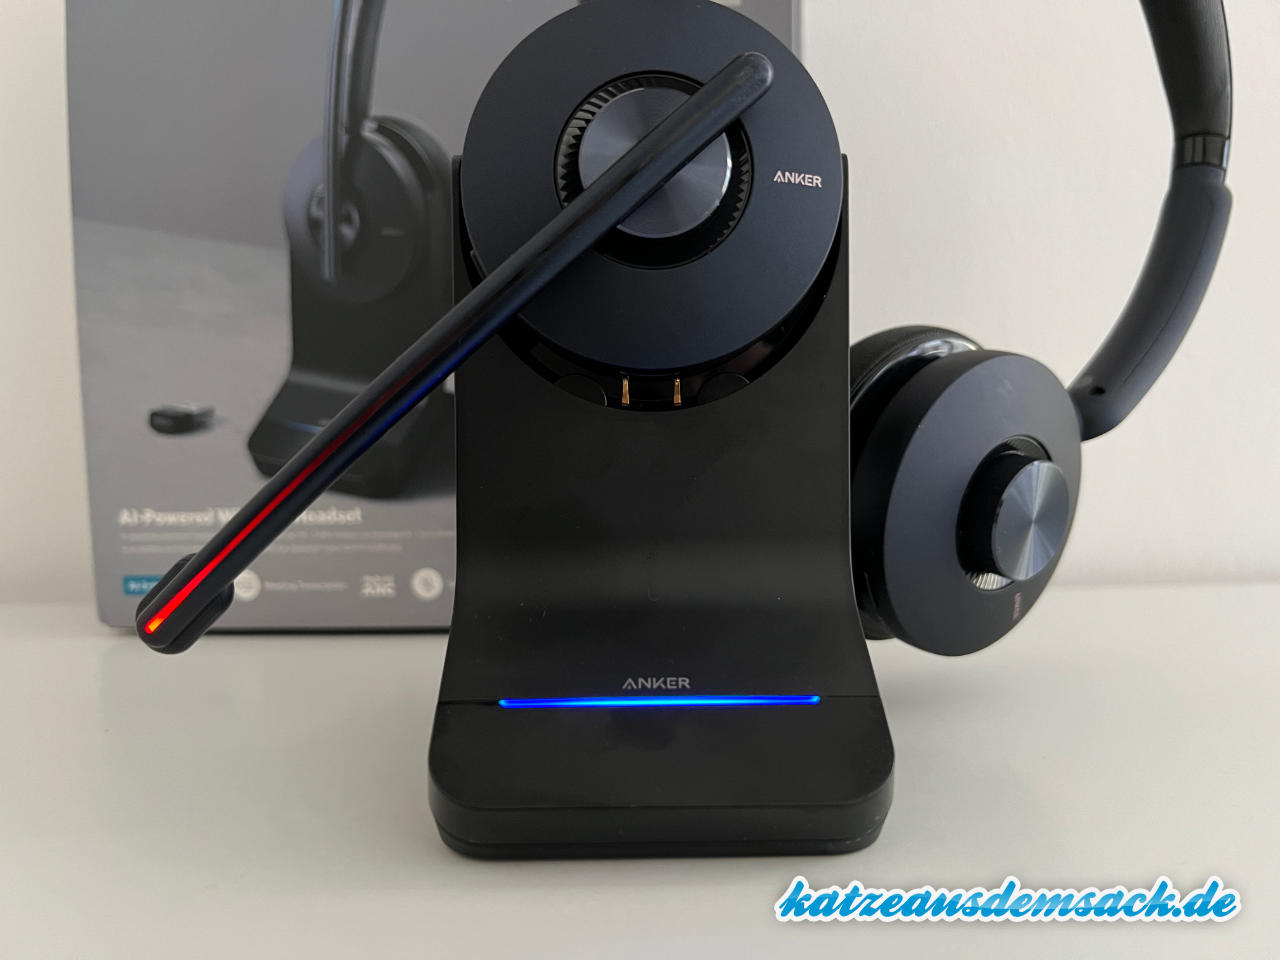 Alltagstest des Anker PowerConf H700 Wireless Business Headset